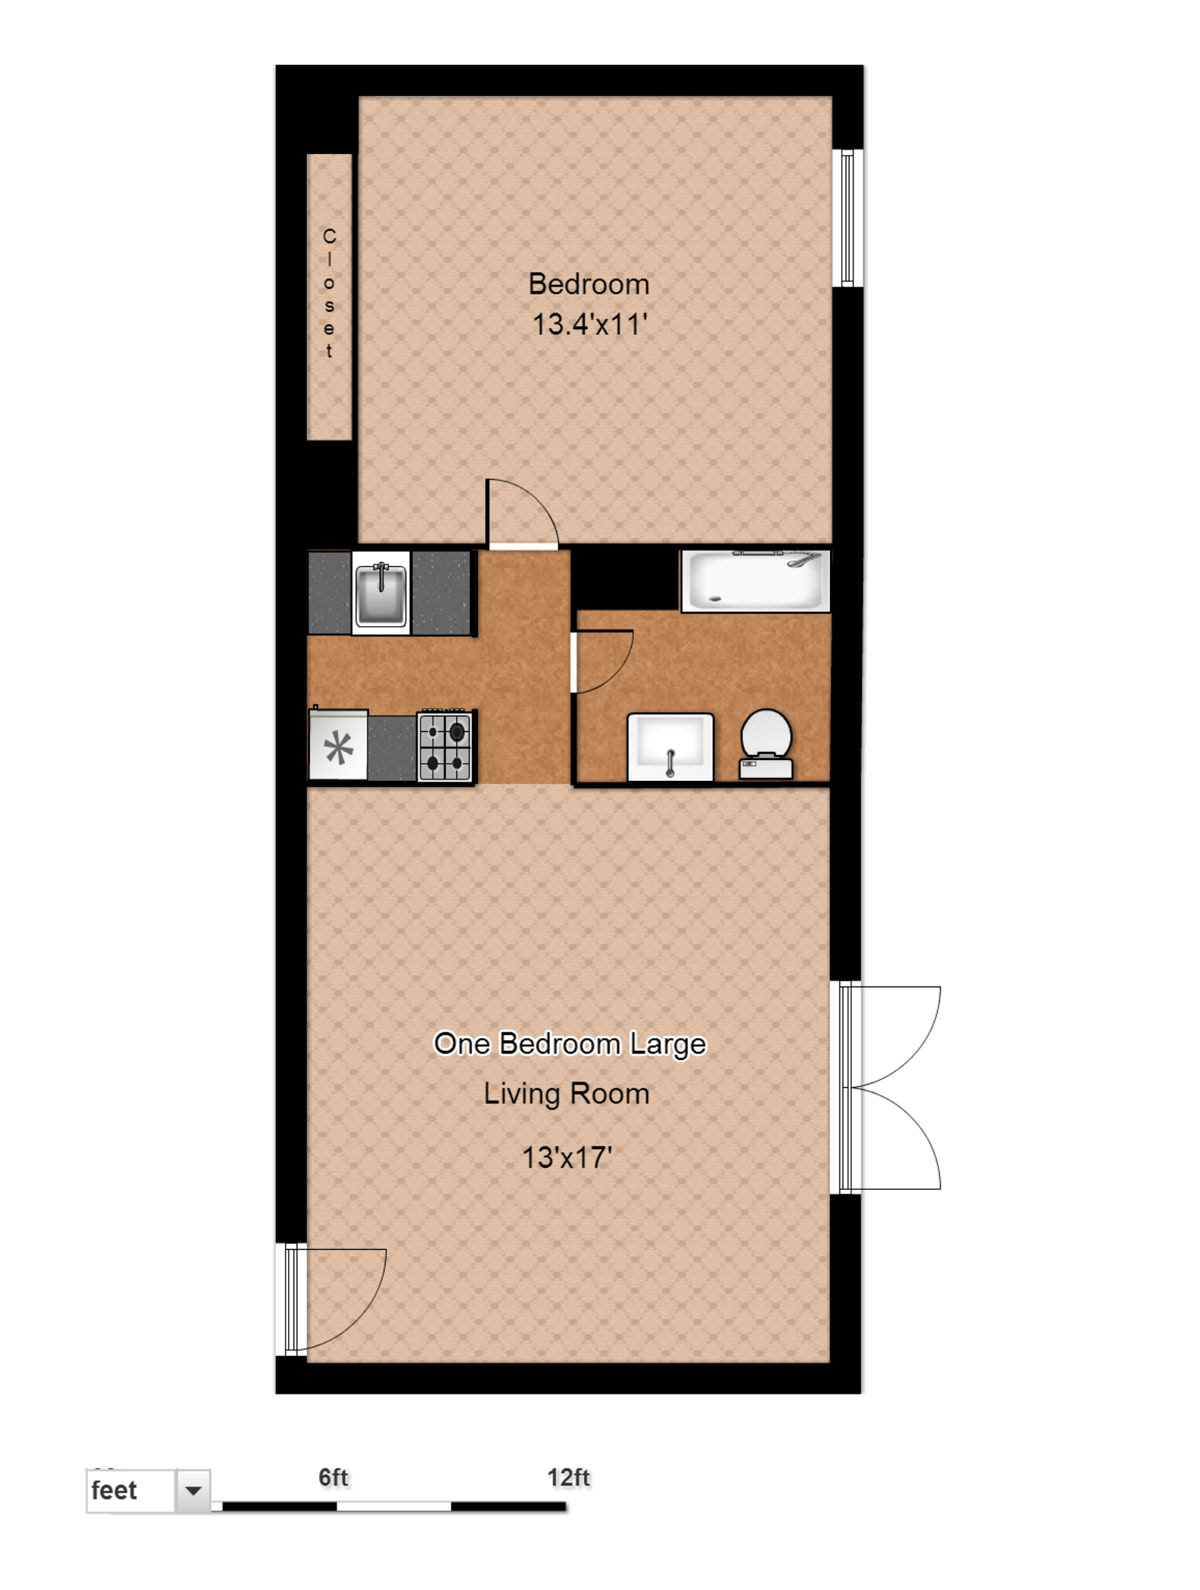 Large 1 Bedroom Apartment Floor Plans - Joeryo ideas